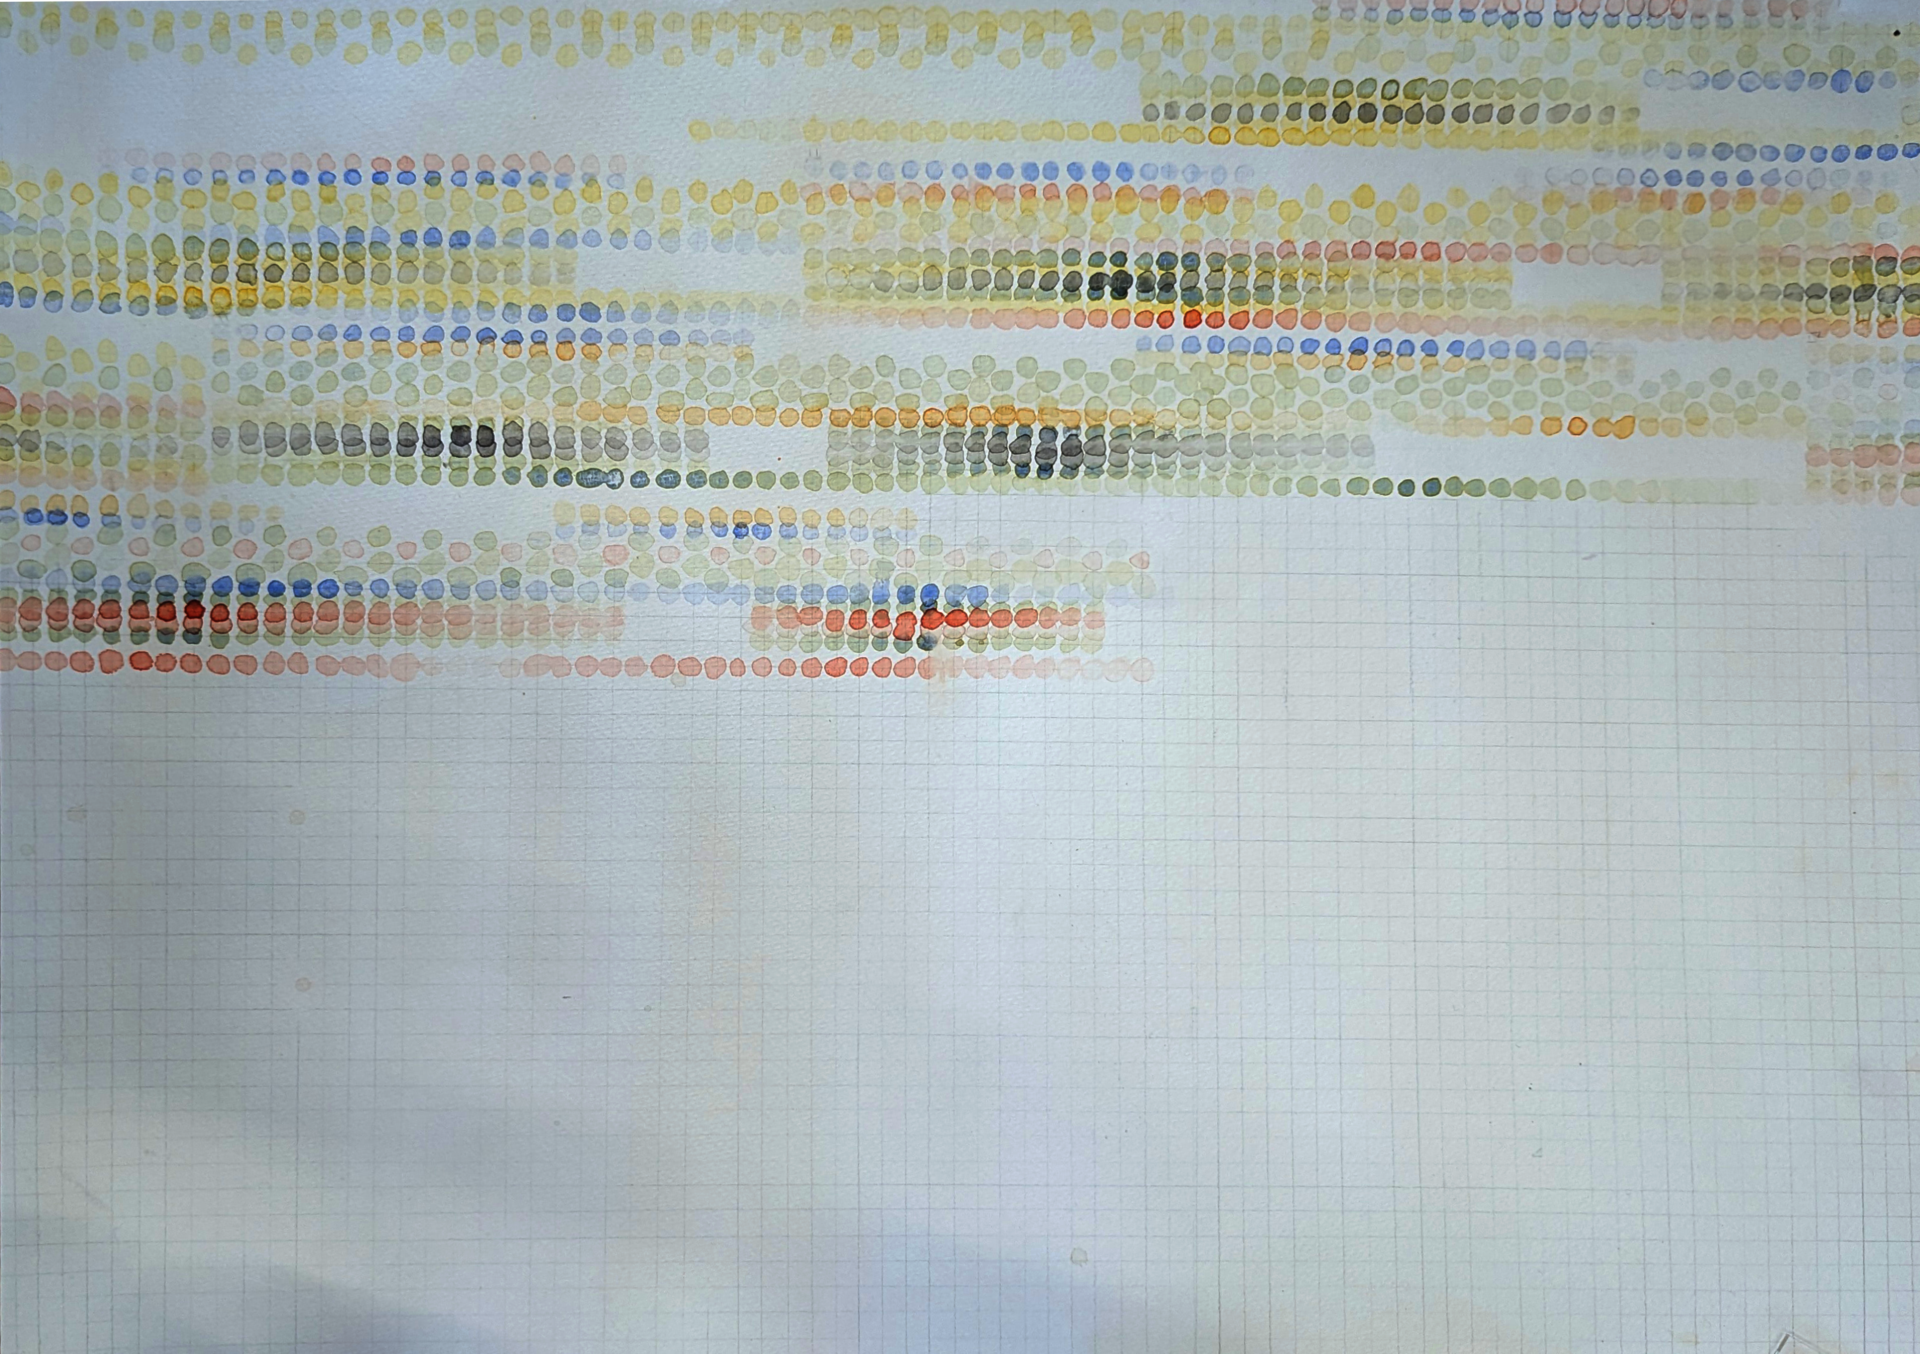 Watercolor dots in rows gradually increasing and decreasing in transparency